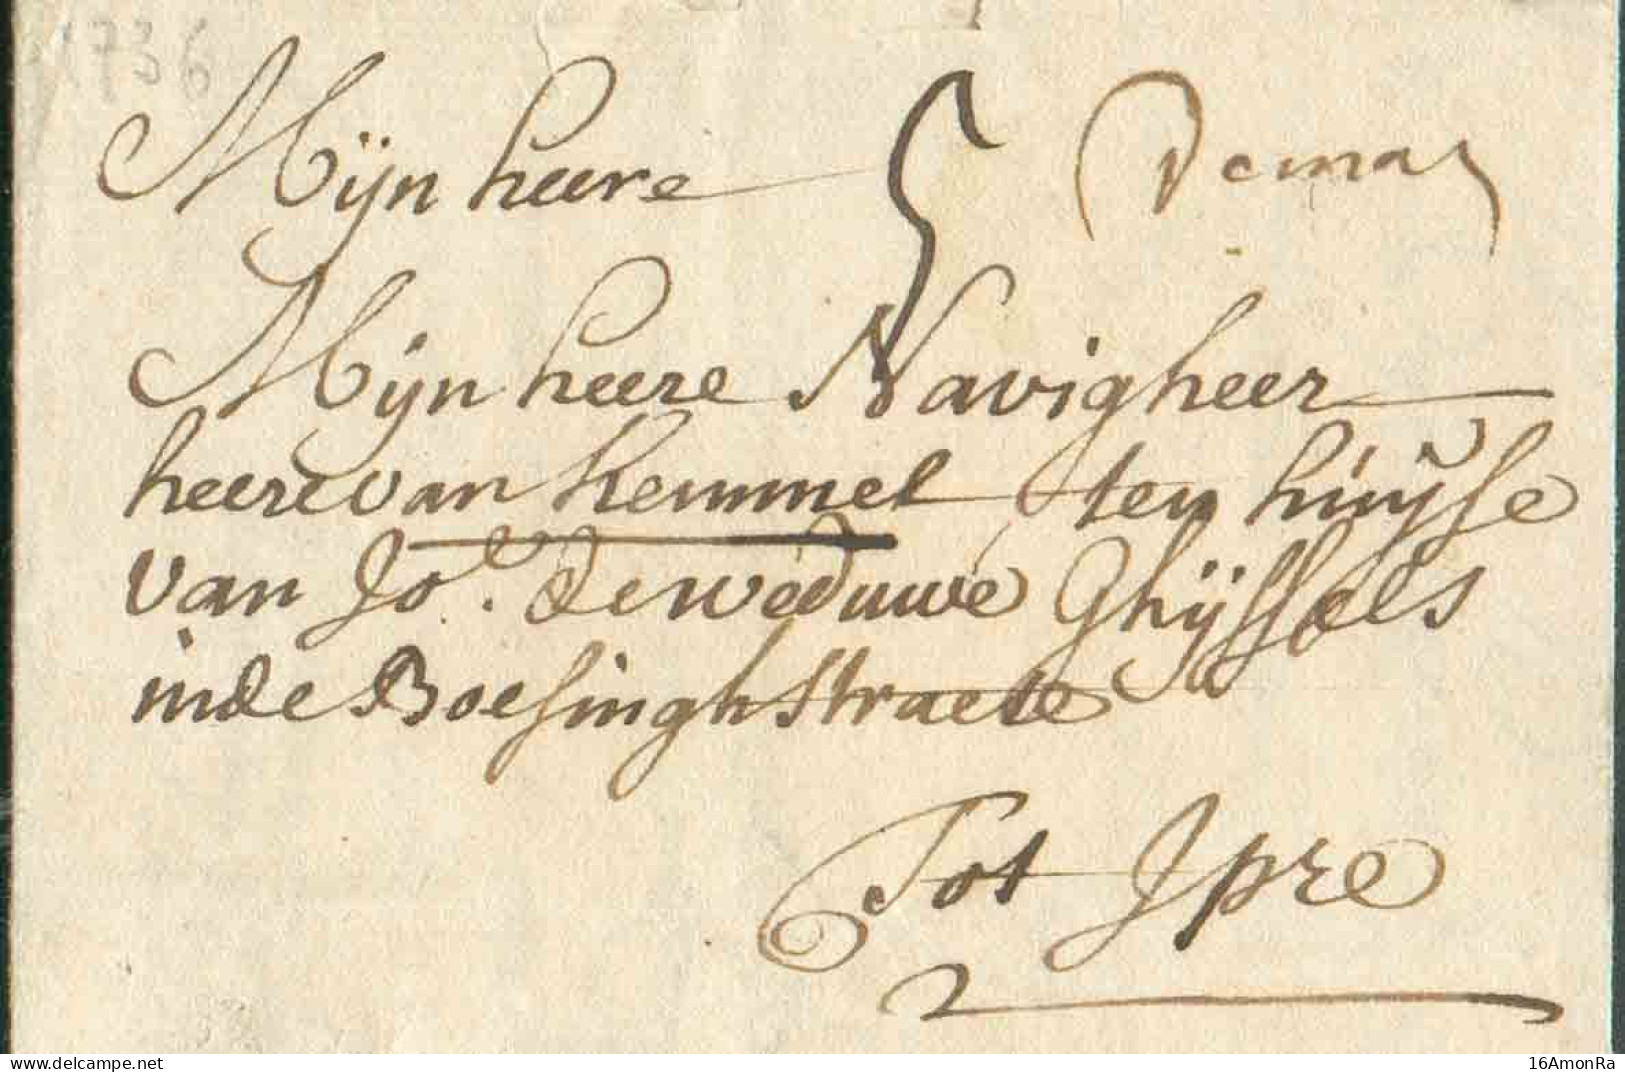 LAC De MALINES Le 11 Février 1738 Vers Ypres. Port De '5' Sols (encre). - TTB -  14388 - 1714-1794 (Oostenrijkse Nederlanden)